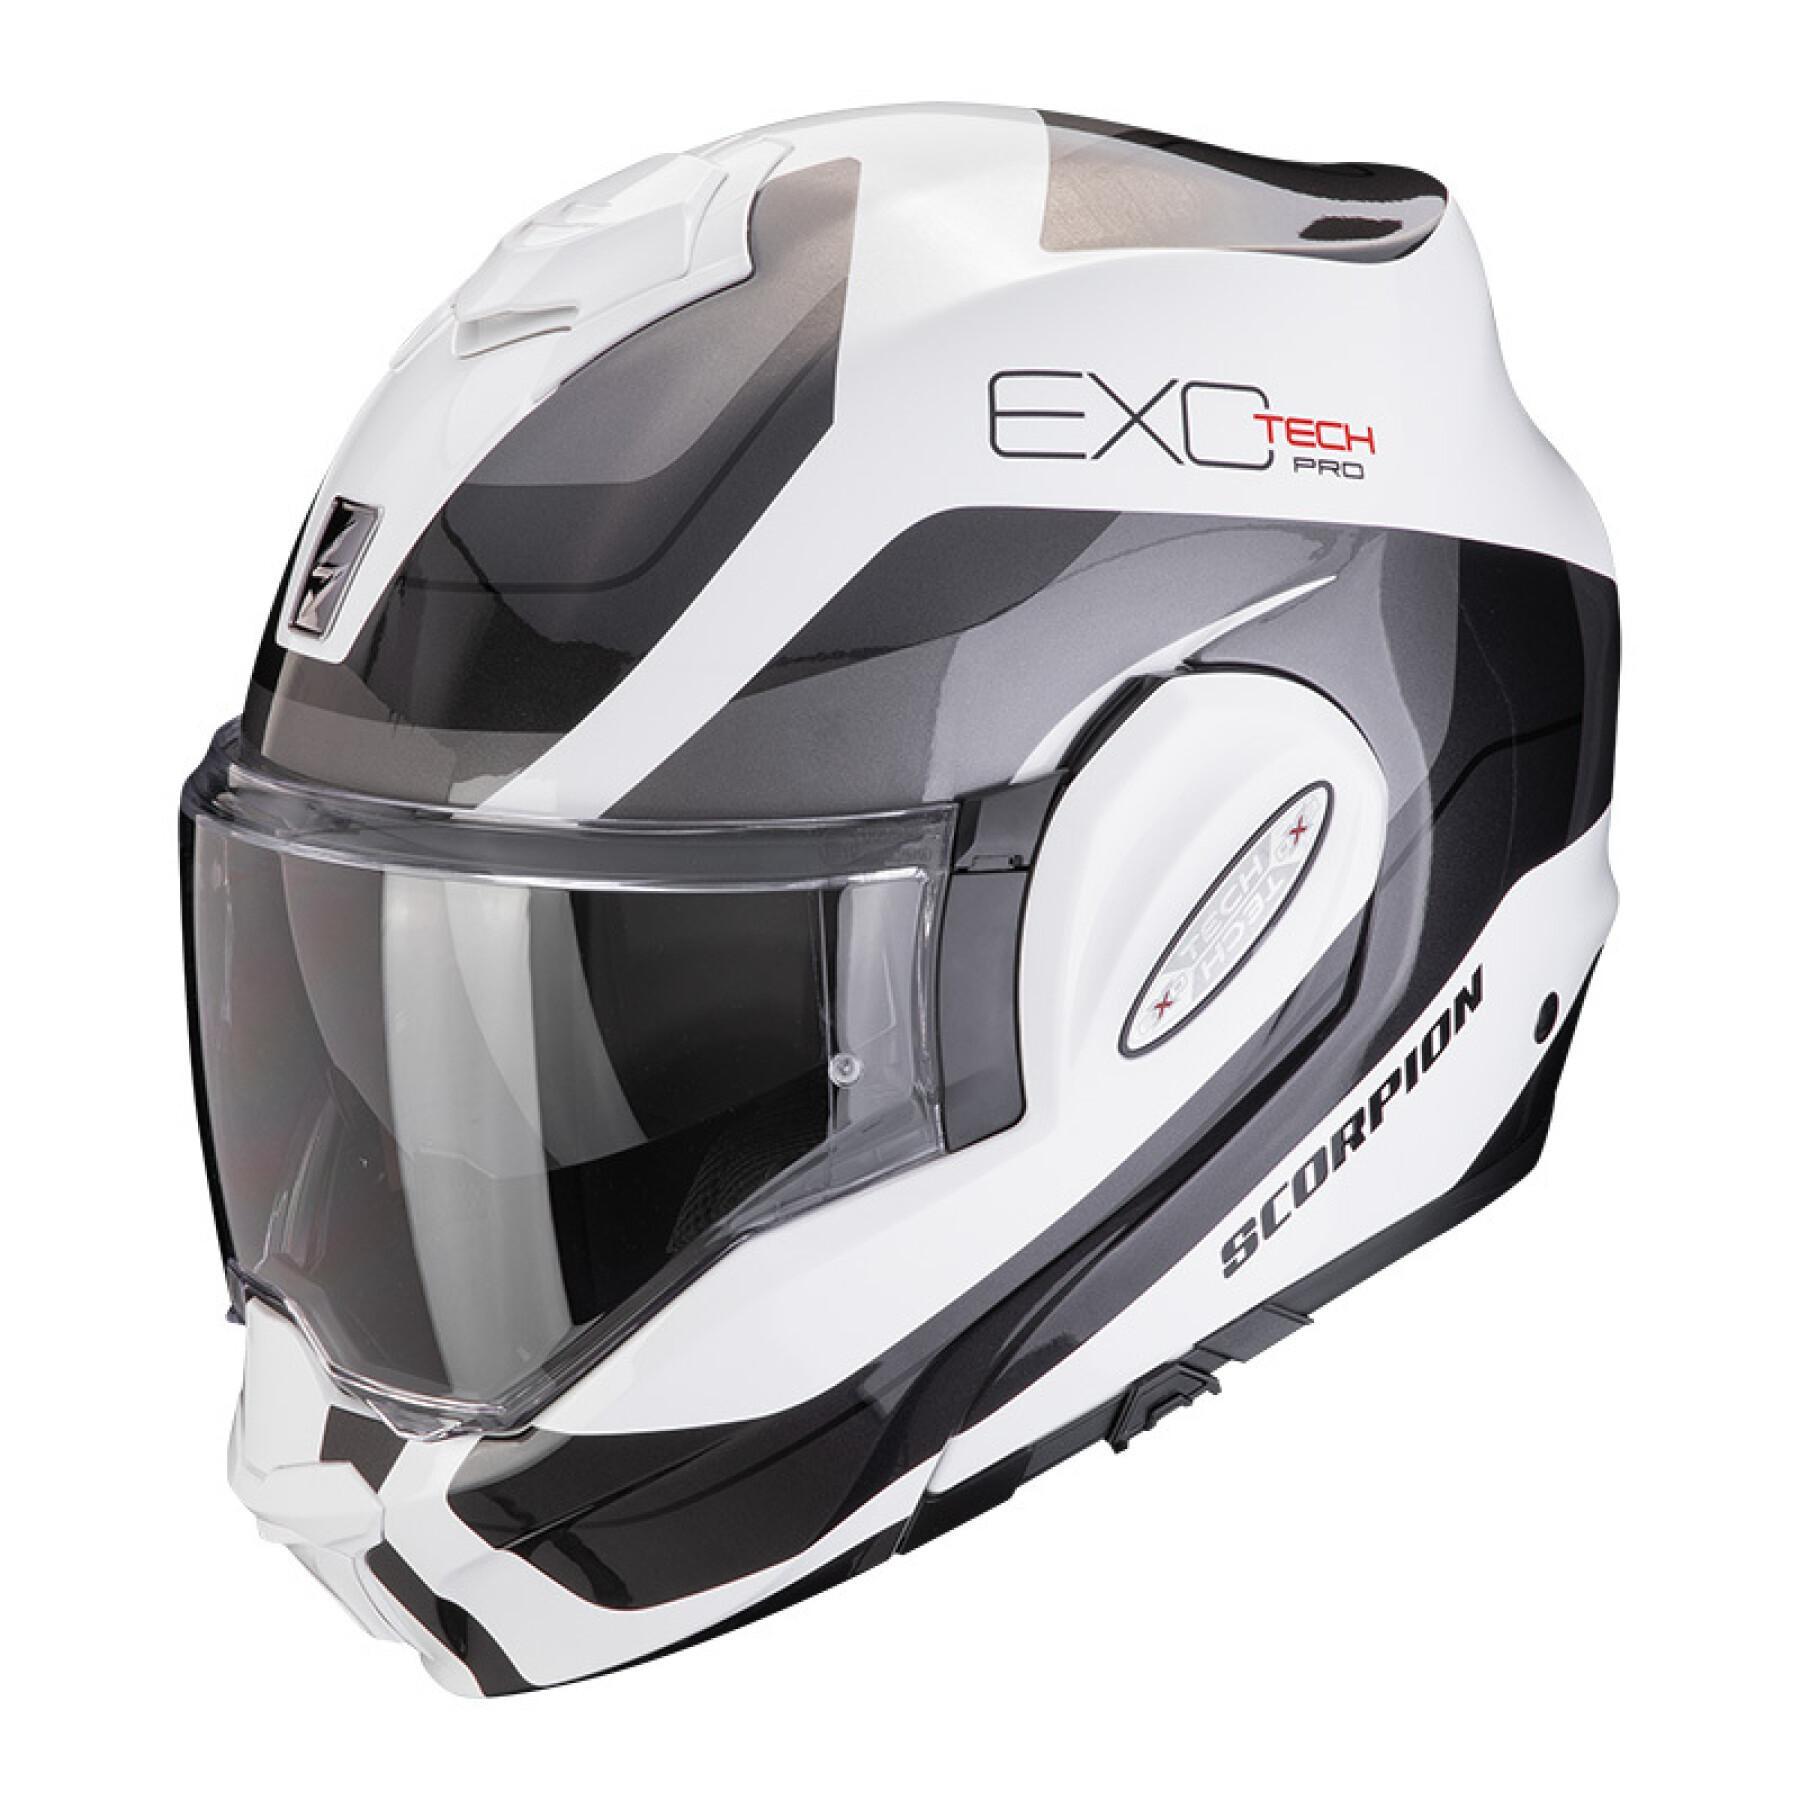 Modular motorcycle helmet Scorpion Exo-tech Evo Pro Commuta